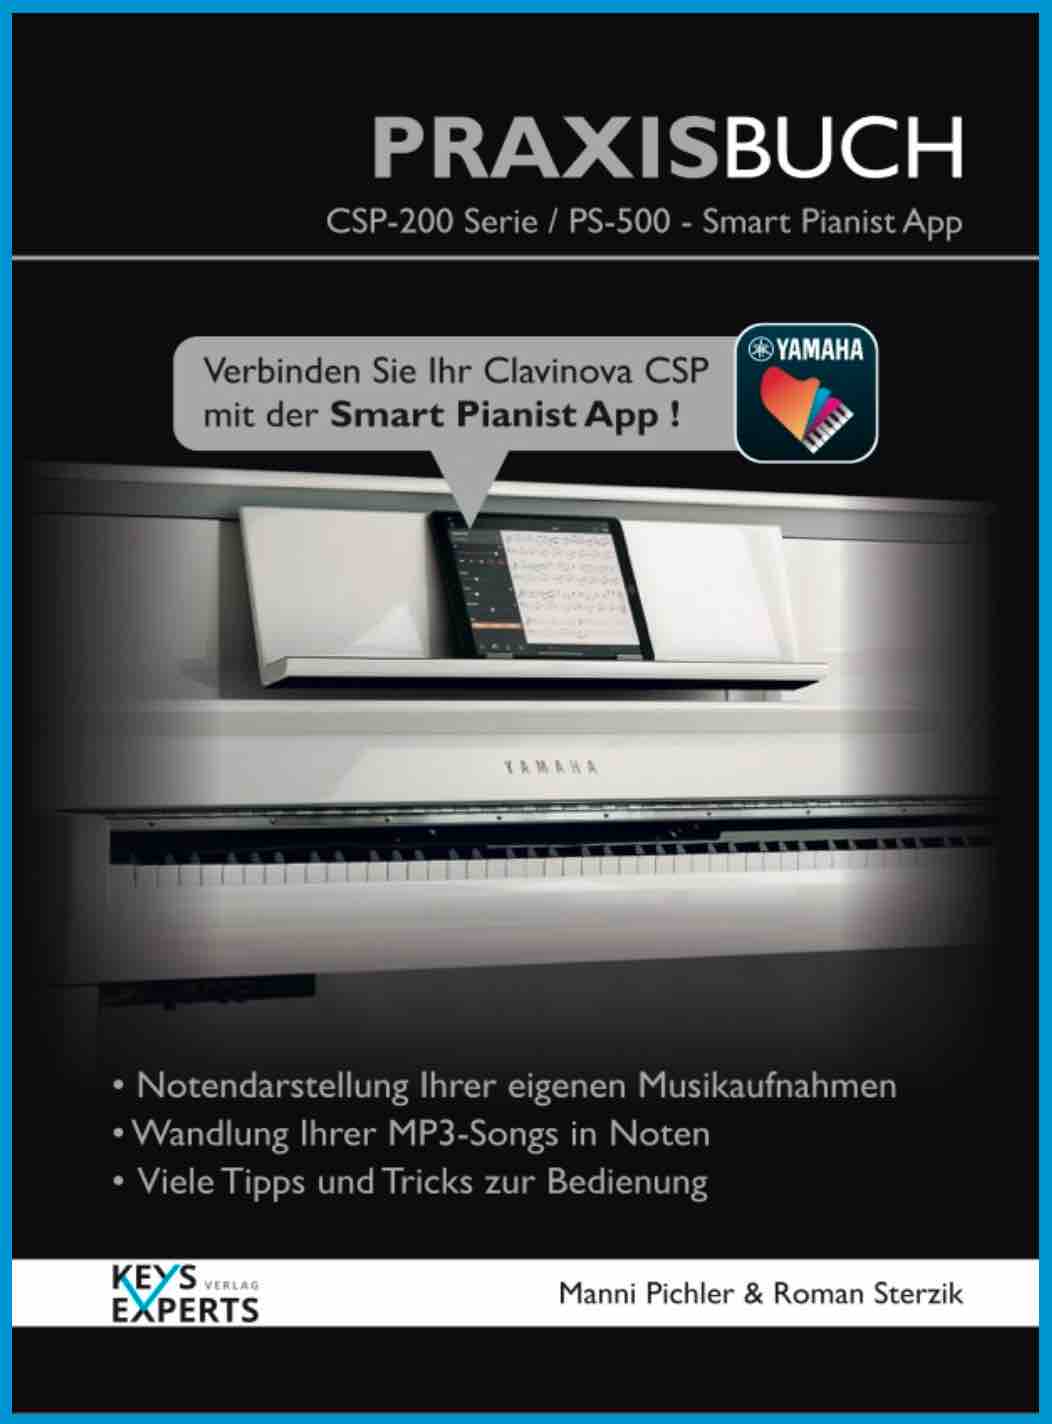 Praxisbuch Yamaha CSP 200 Serie